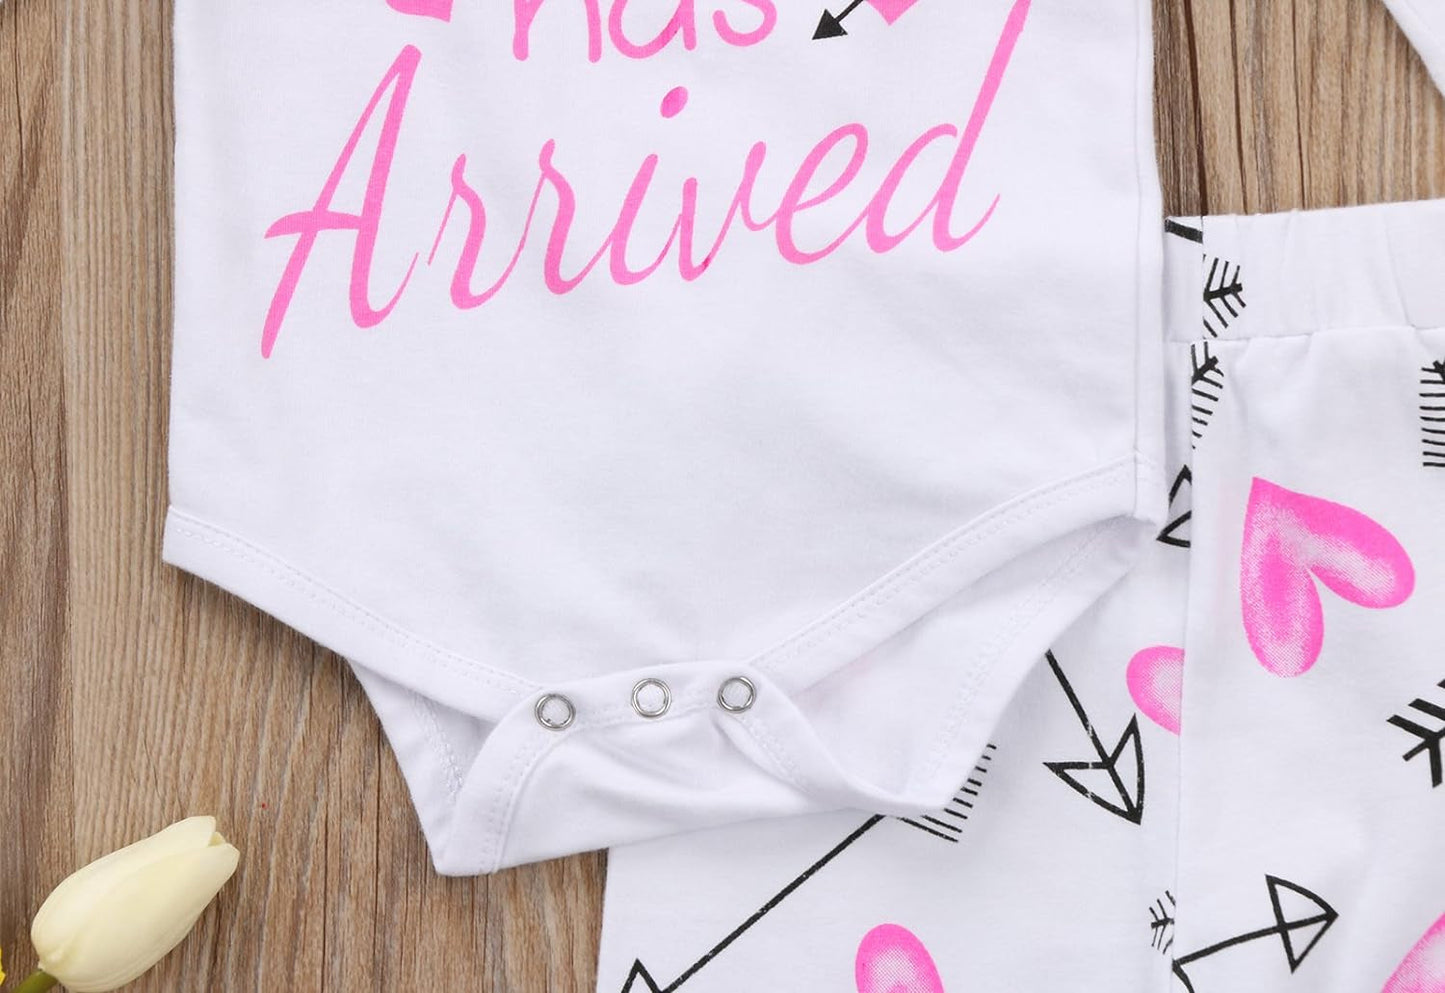 4 Pcs Baby Girls Pants Set Newborn Infant Toddler Letter Romper Arrow Heart Pants Hats Headband Clothes